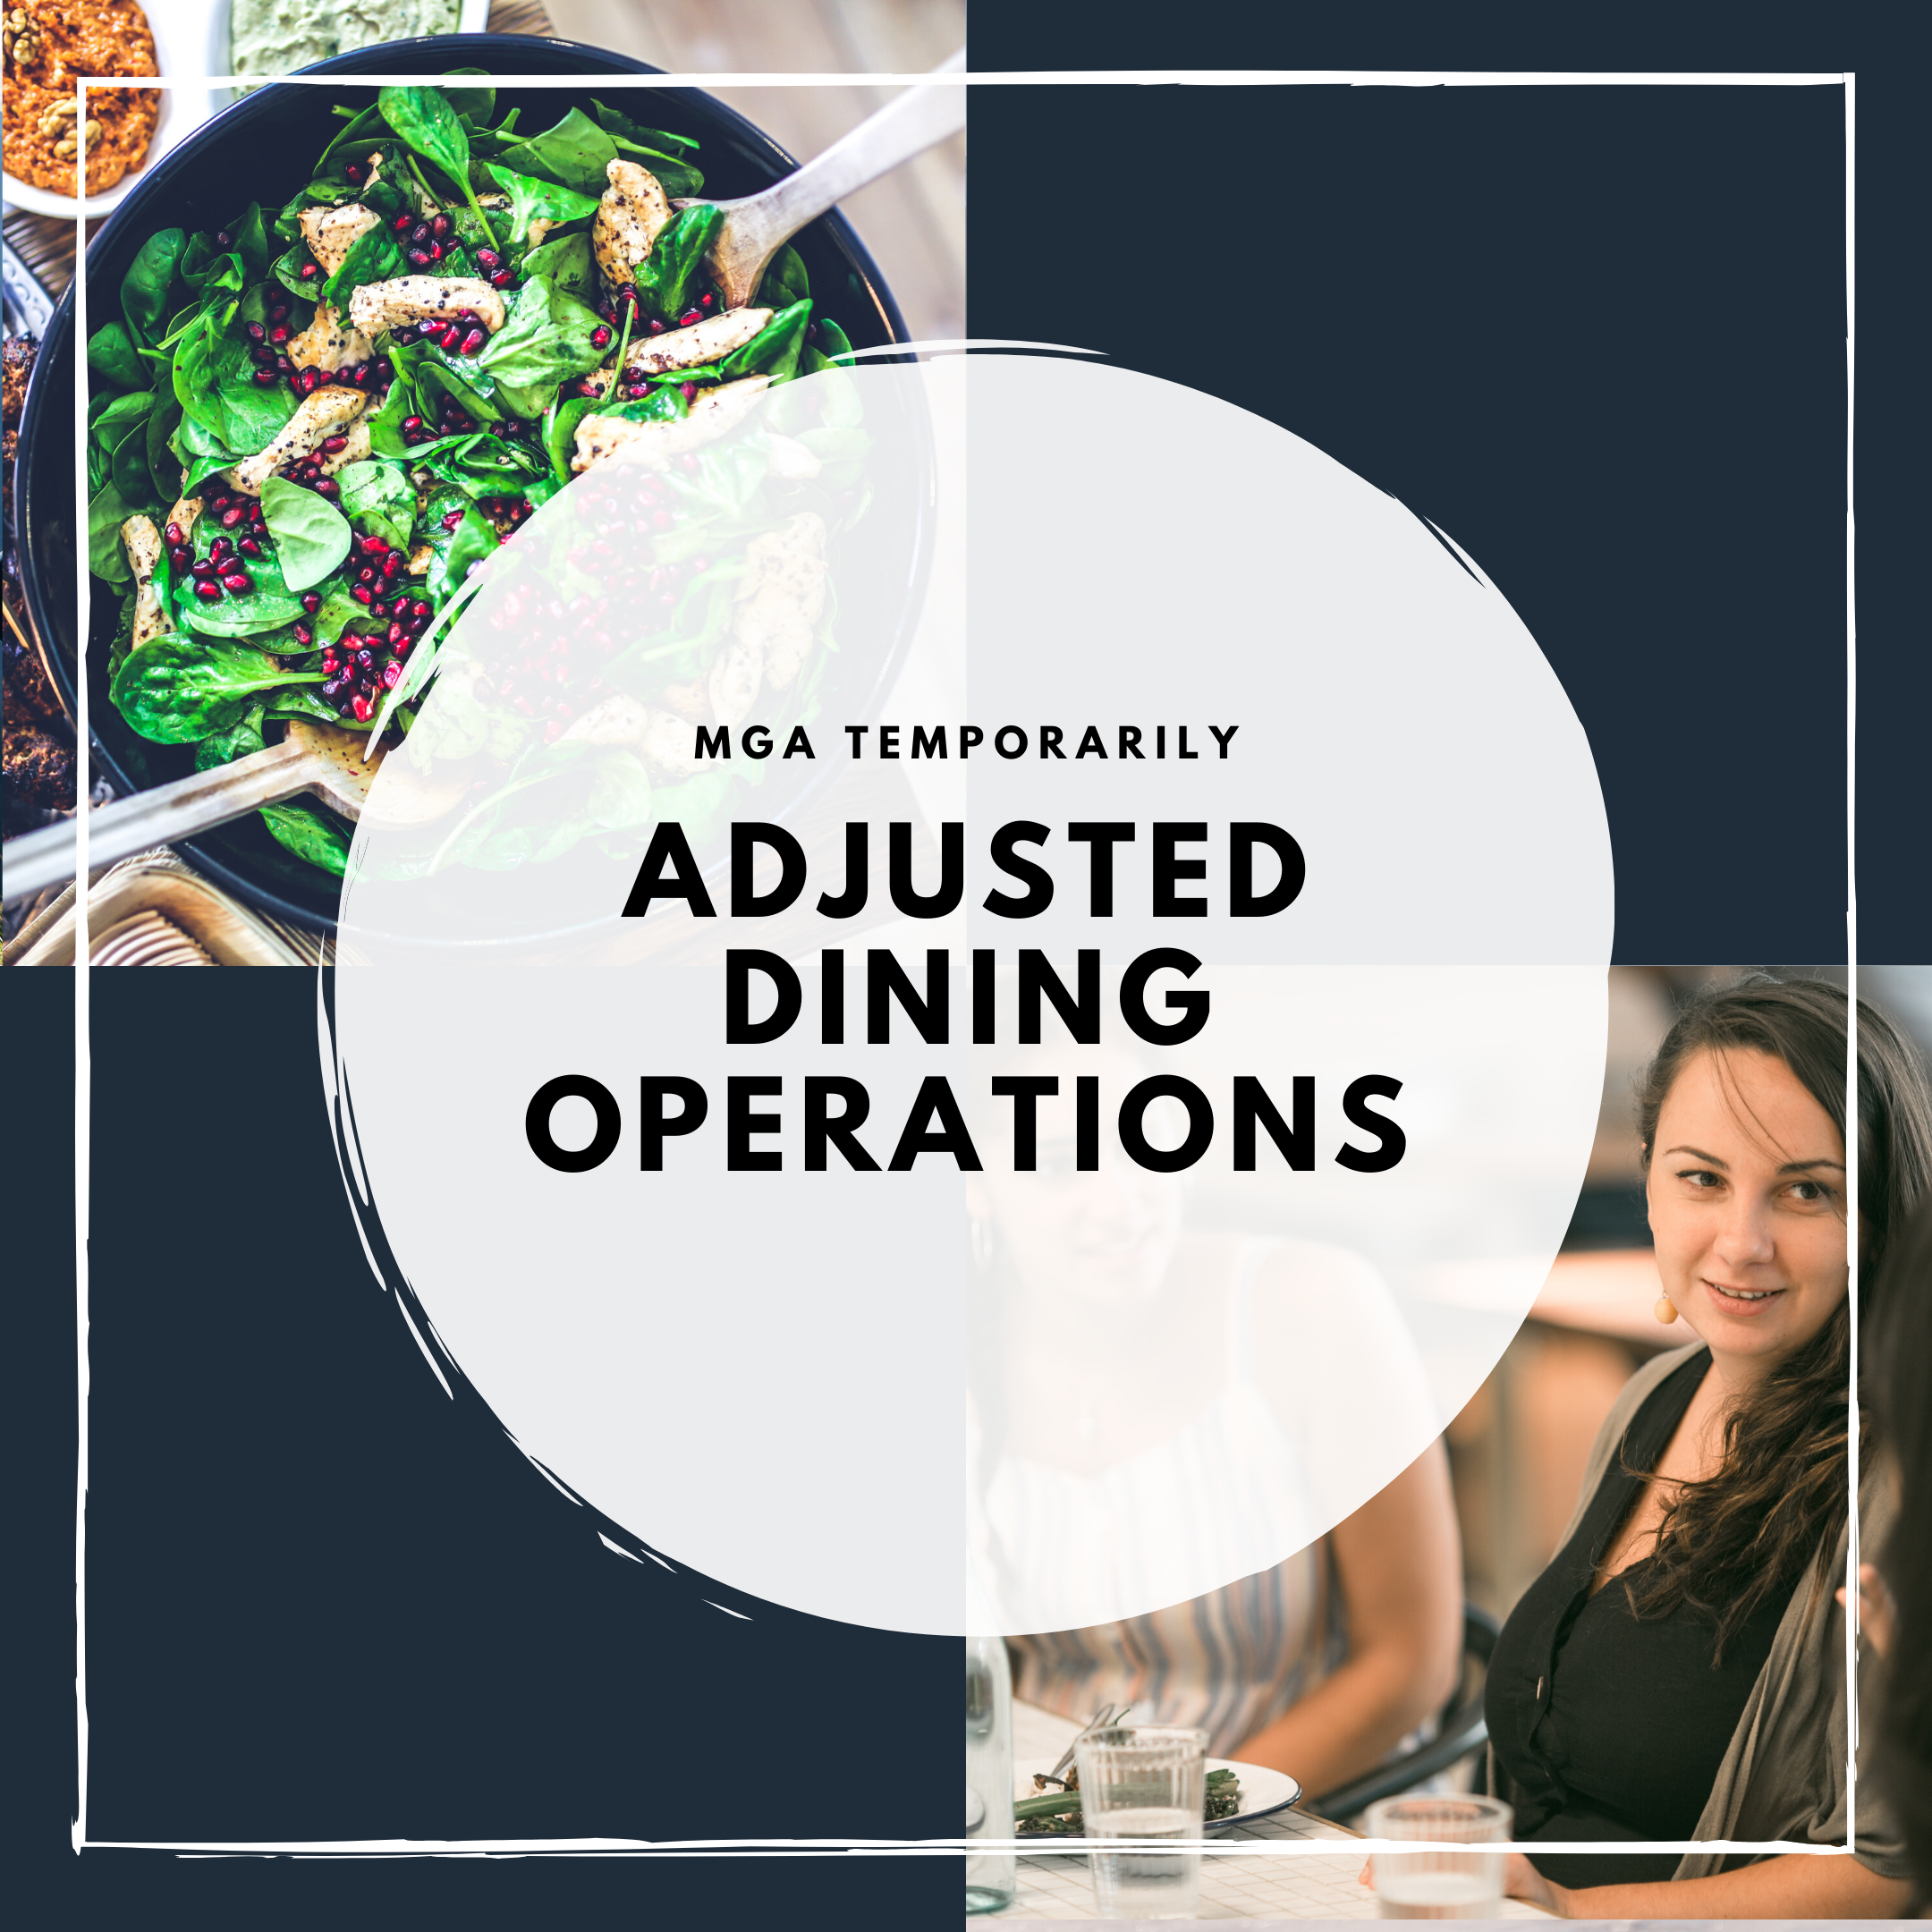 MGA Temporarily Adjusted Dining Operations